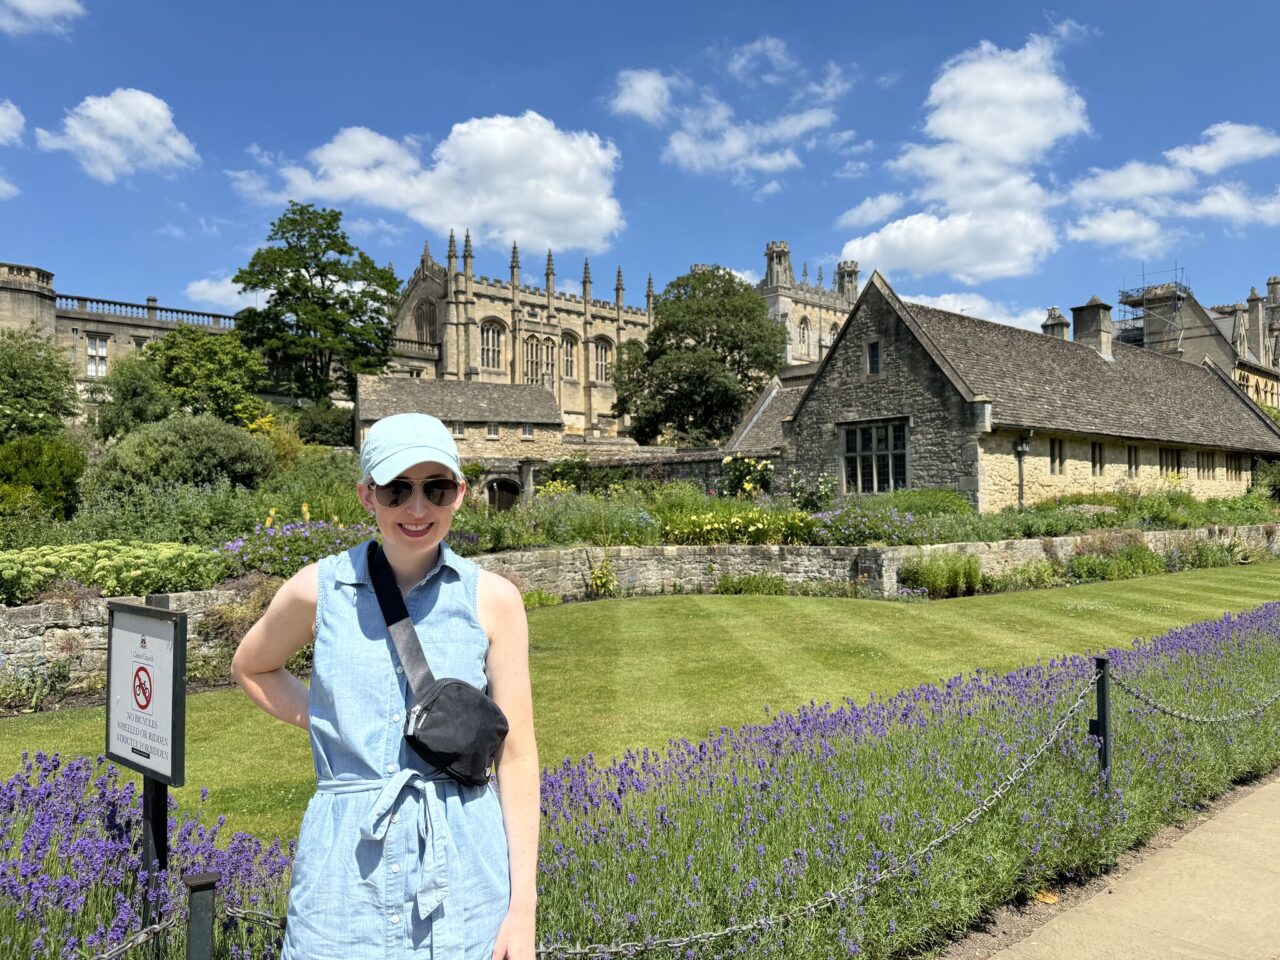 Emily K. Drake: I had the opportunity to tour Oxford University on the way to MASCC24